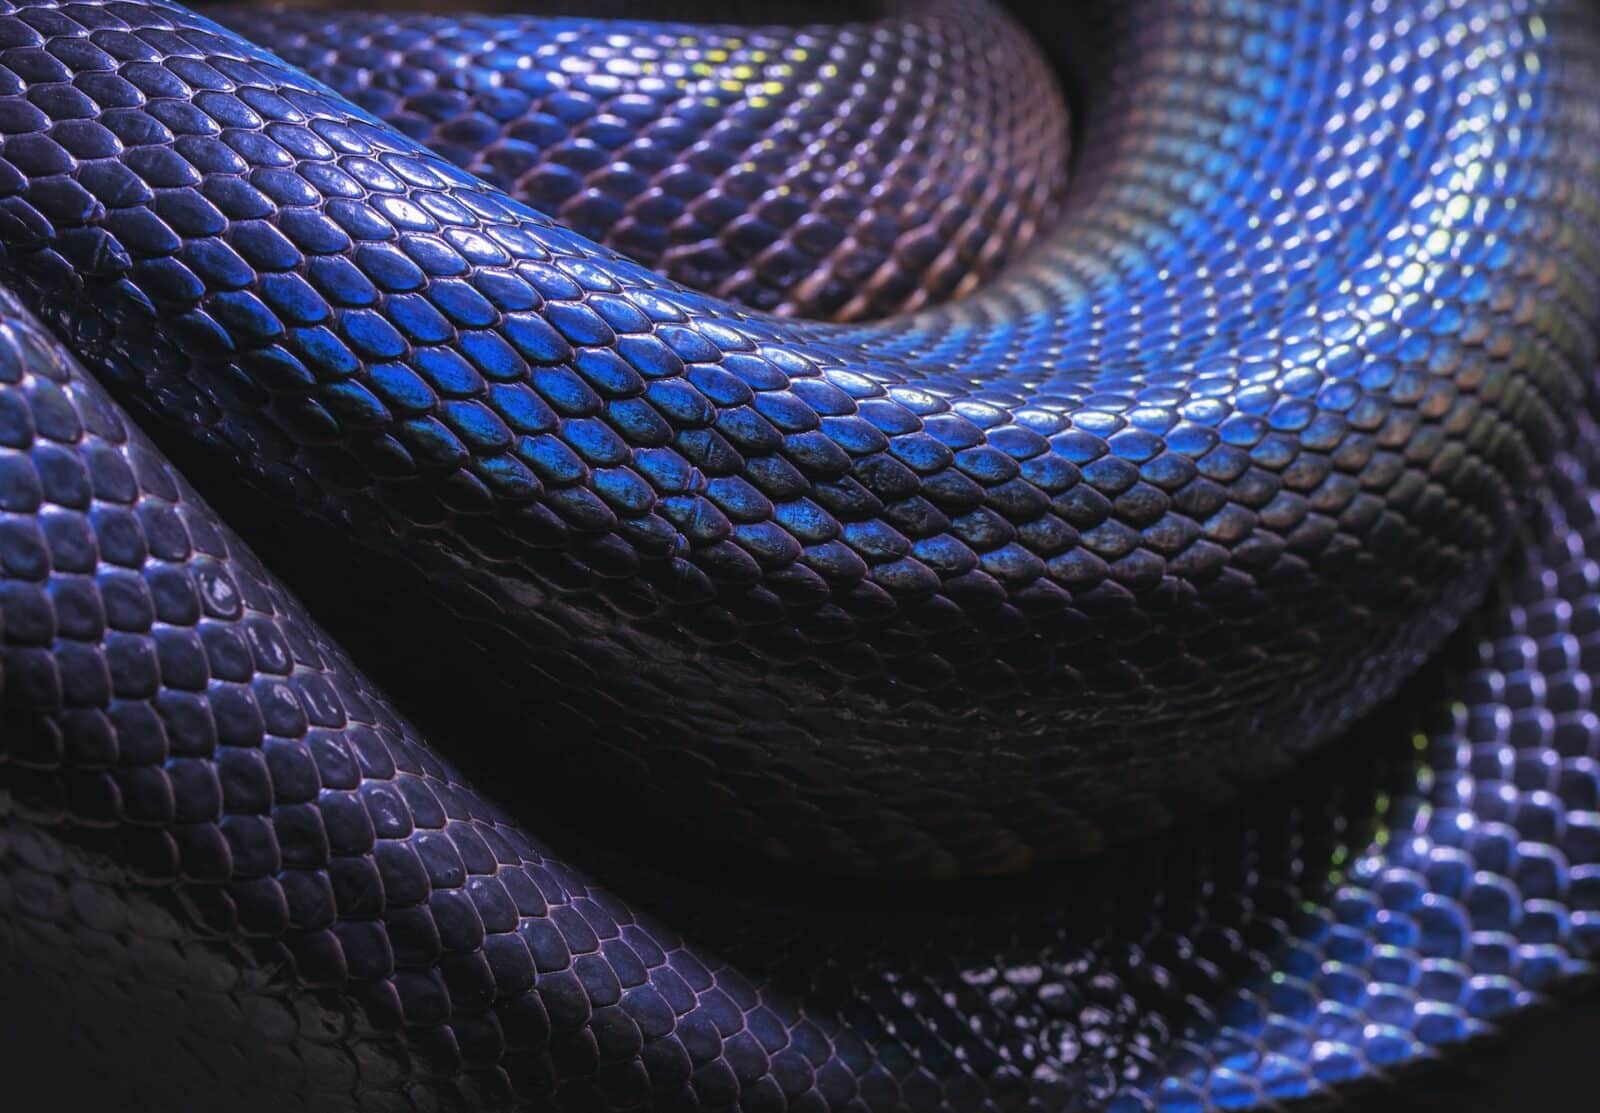 Purple Snakes: Reptiles Resembling a Precious Gemstone